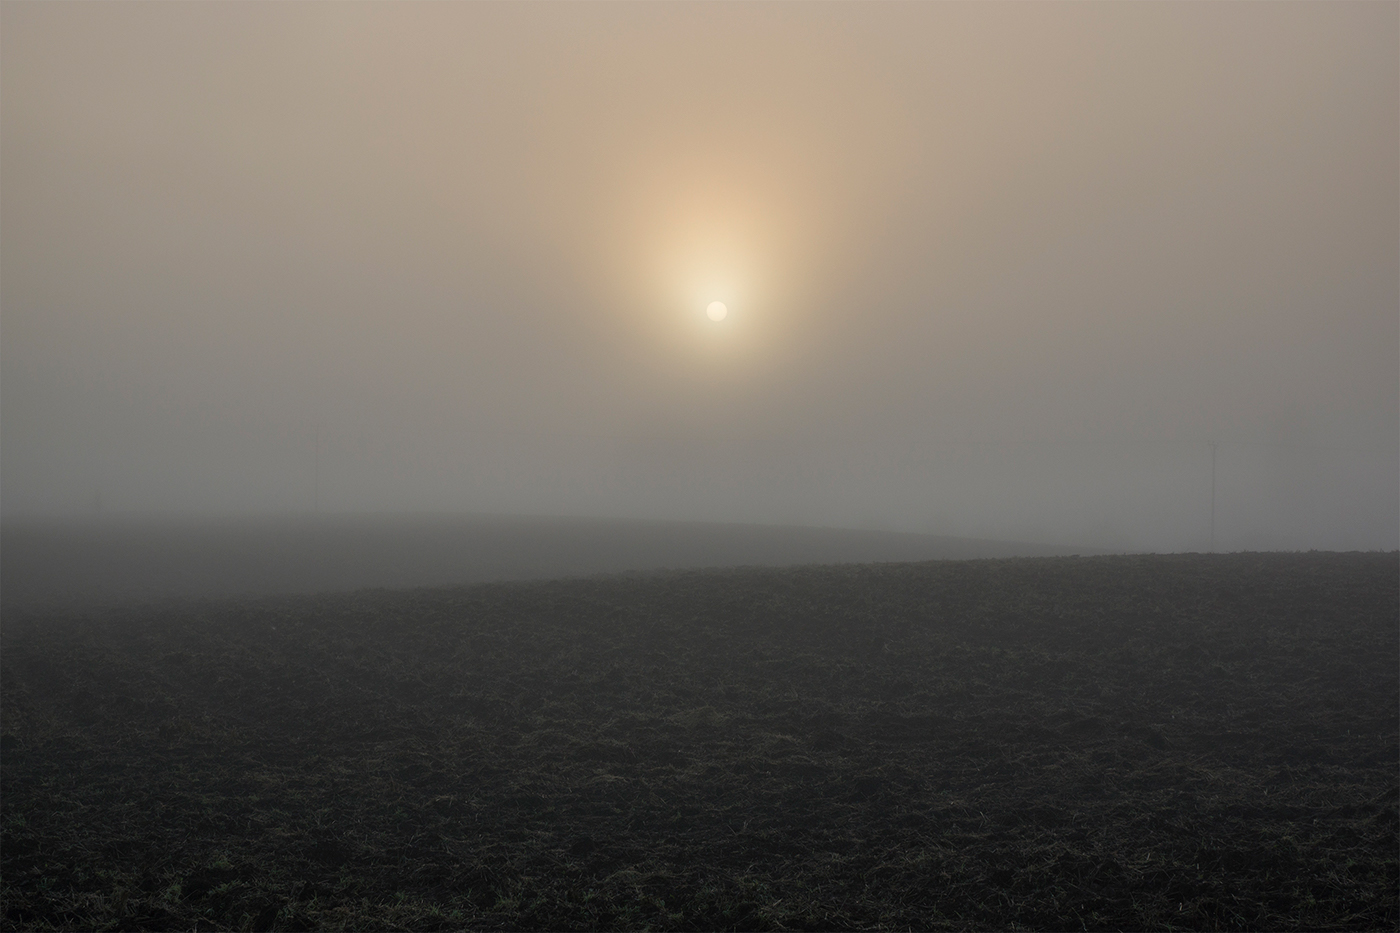 fields rural fog Landscape Minimalism